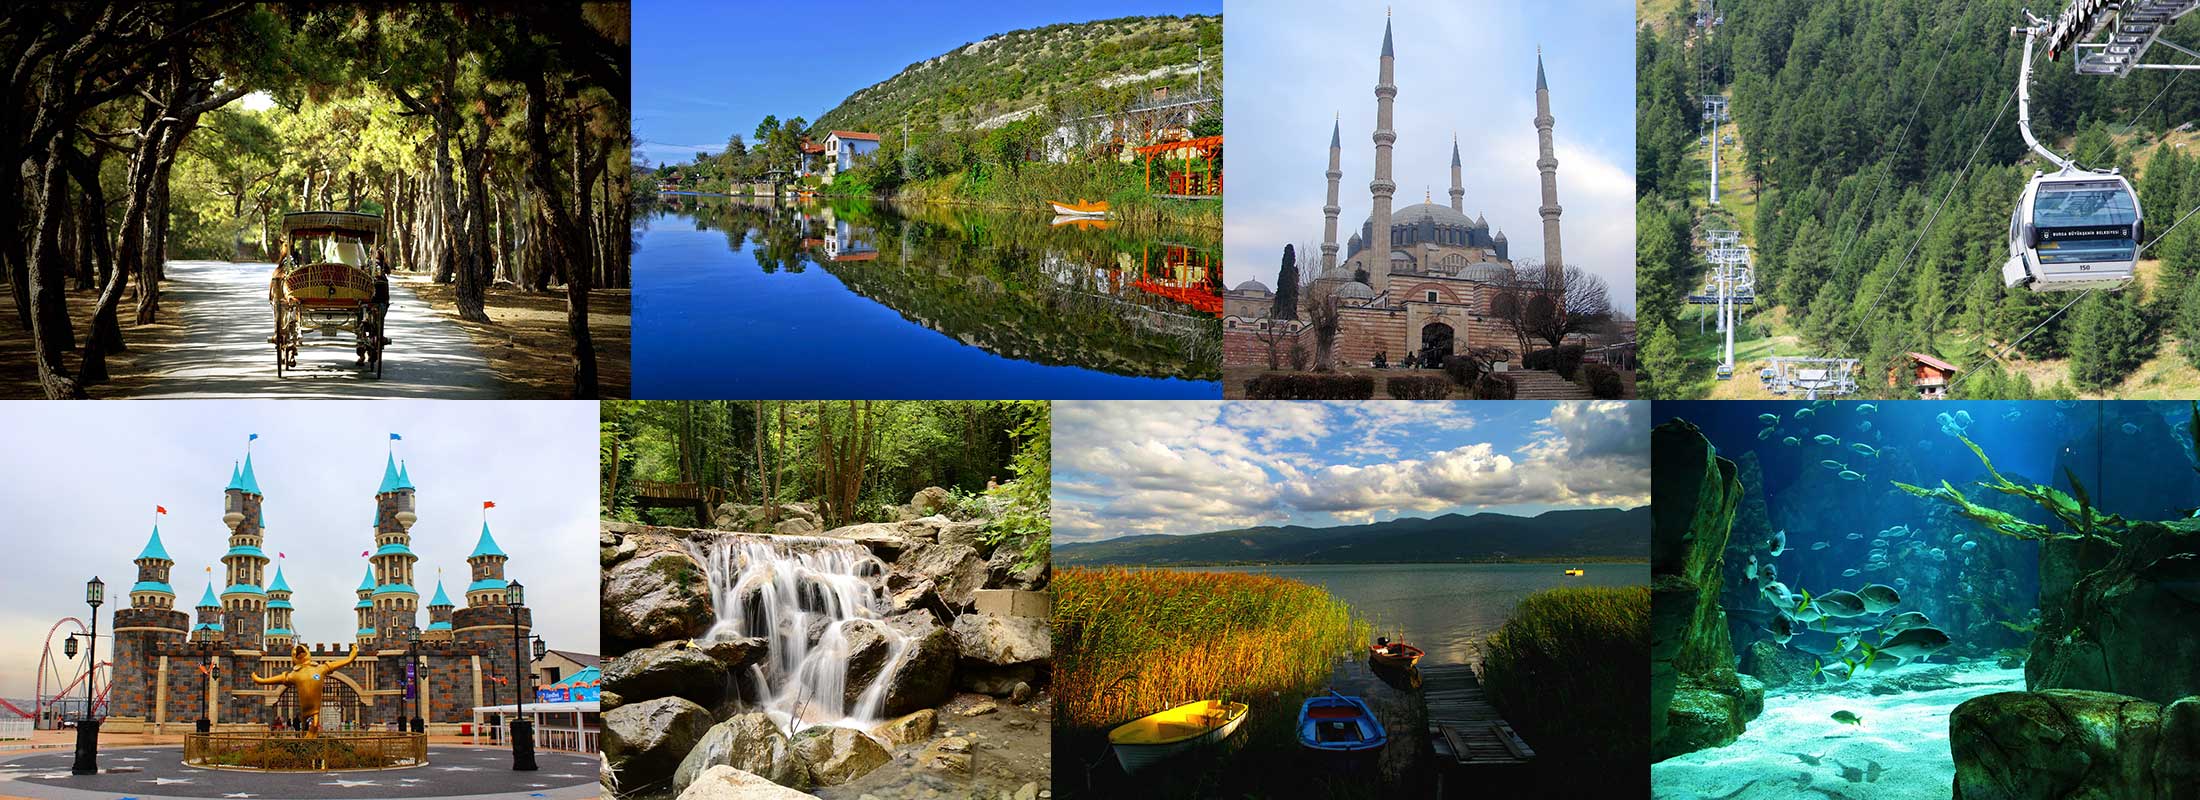 alternative-istanbul-tours-bursa-edirne-princes-islands-sapanca-agva